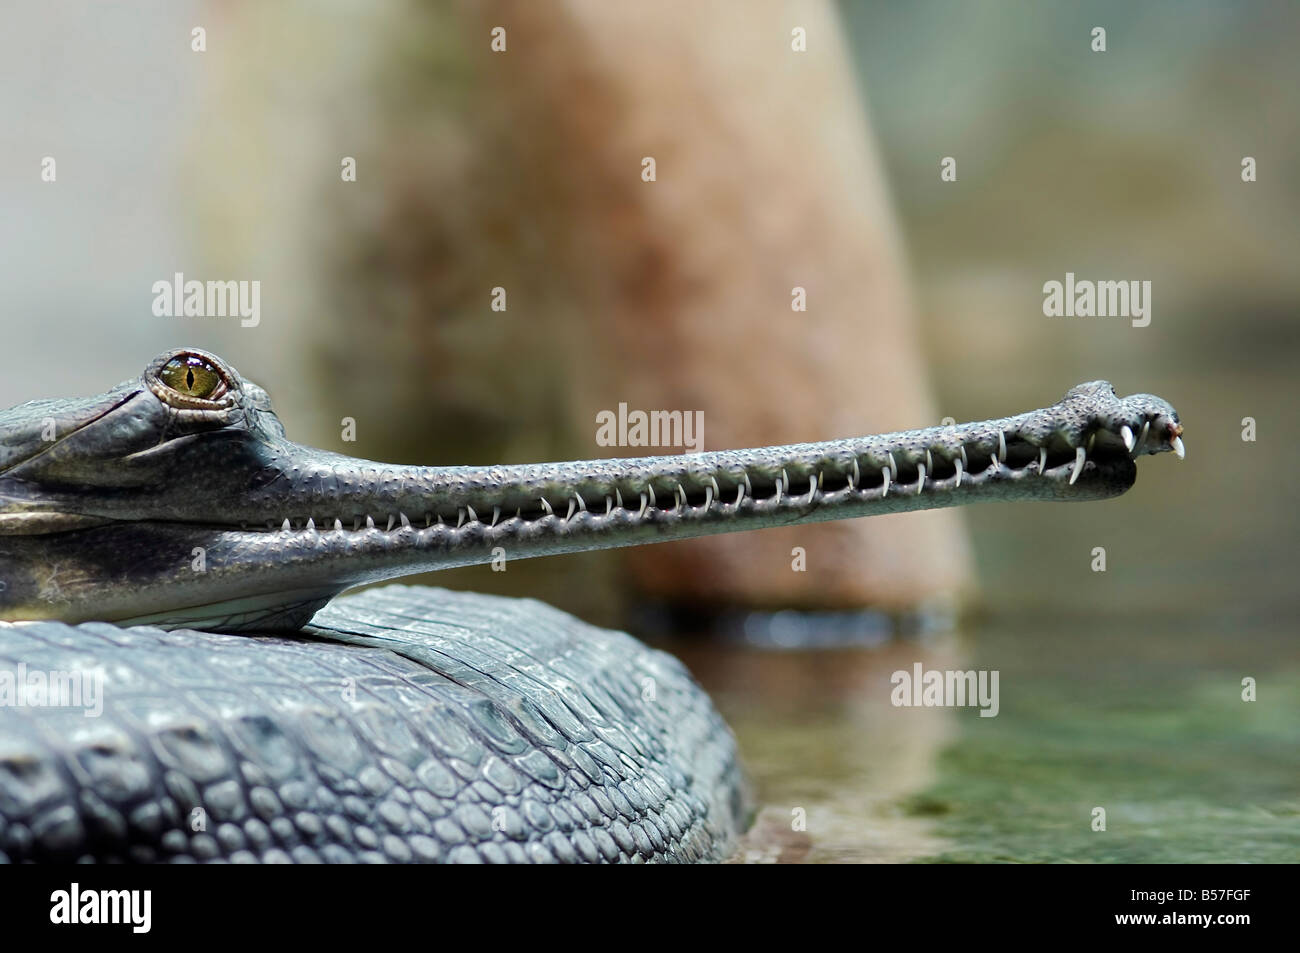 Detail of the head of Indial gavial - endangered species - Gavialis gangeticum Stock Photo